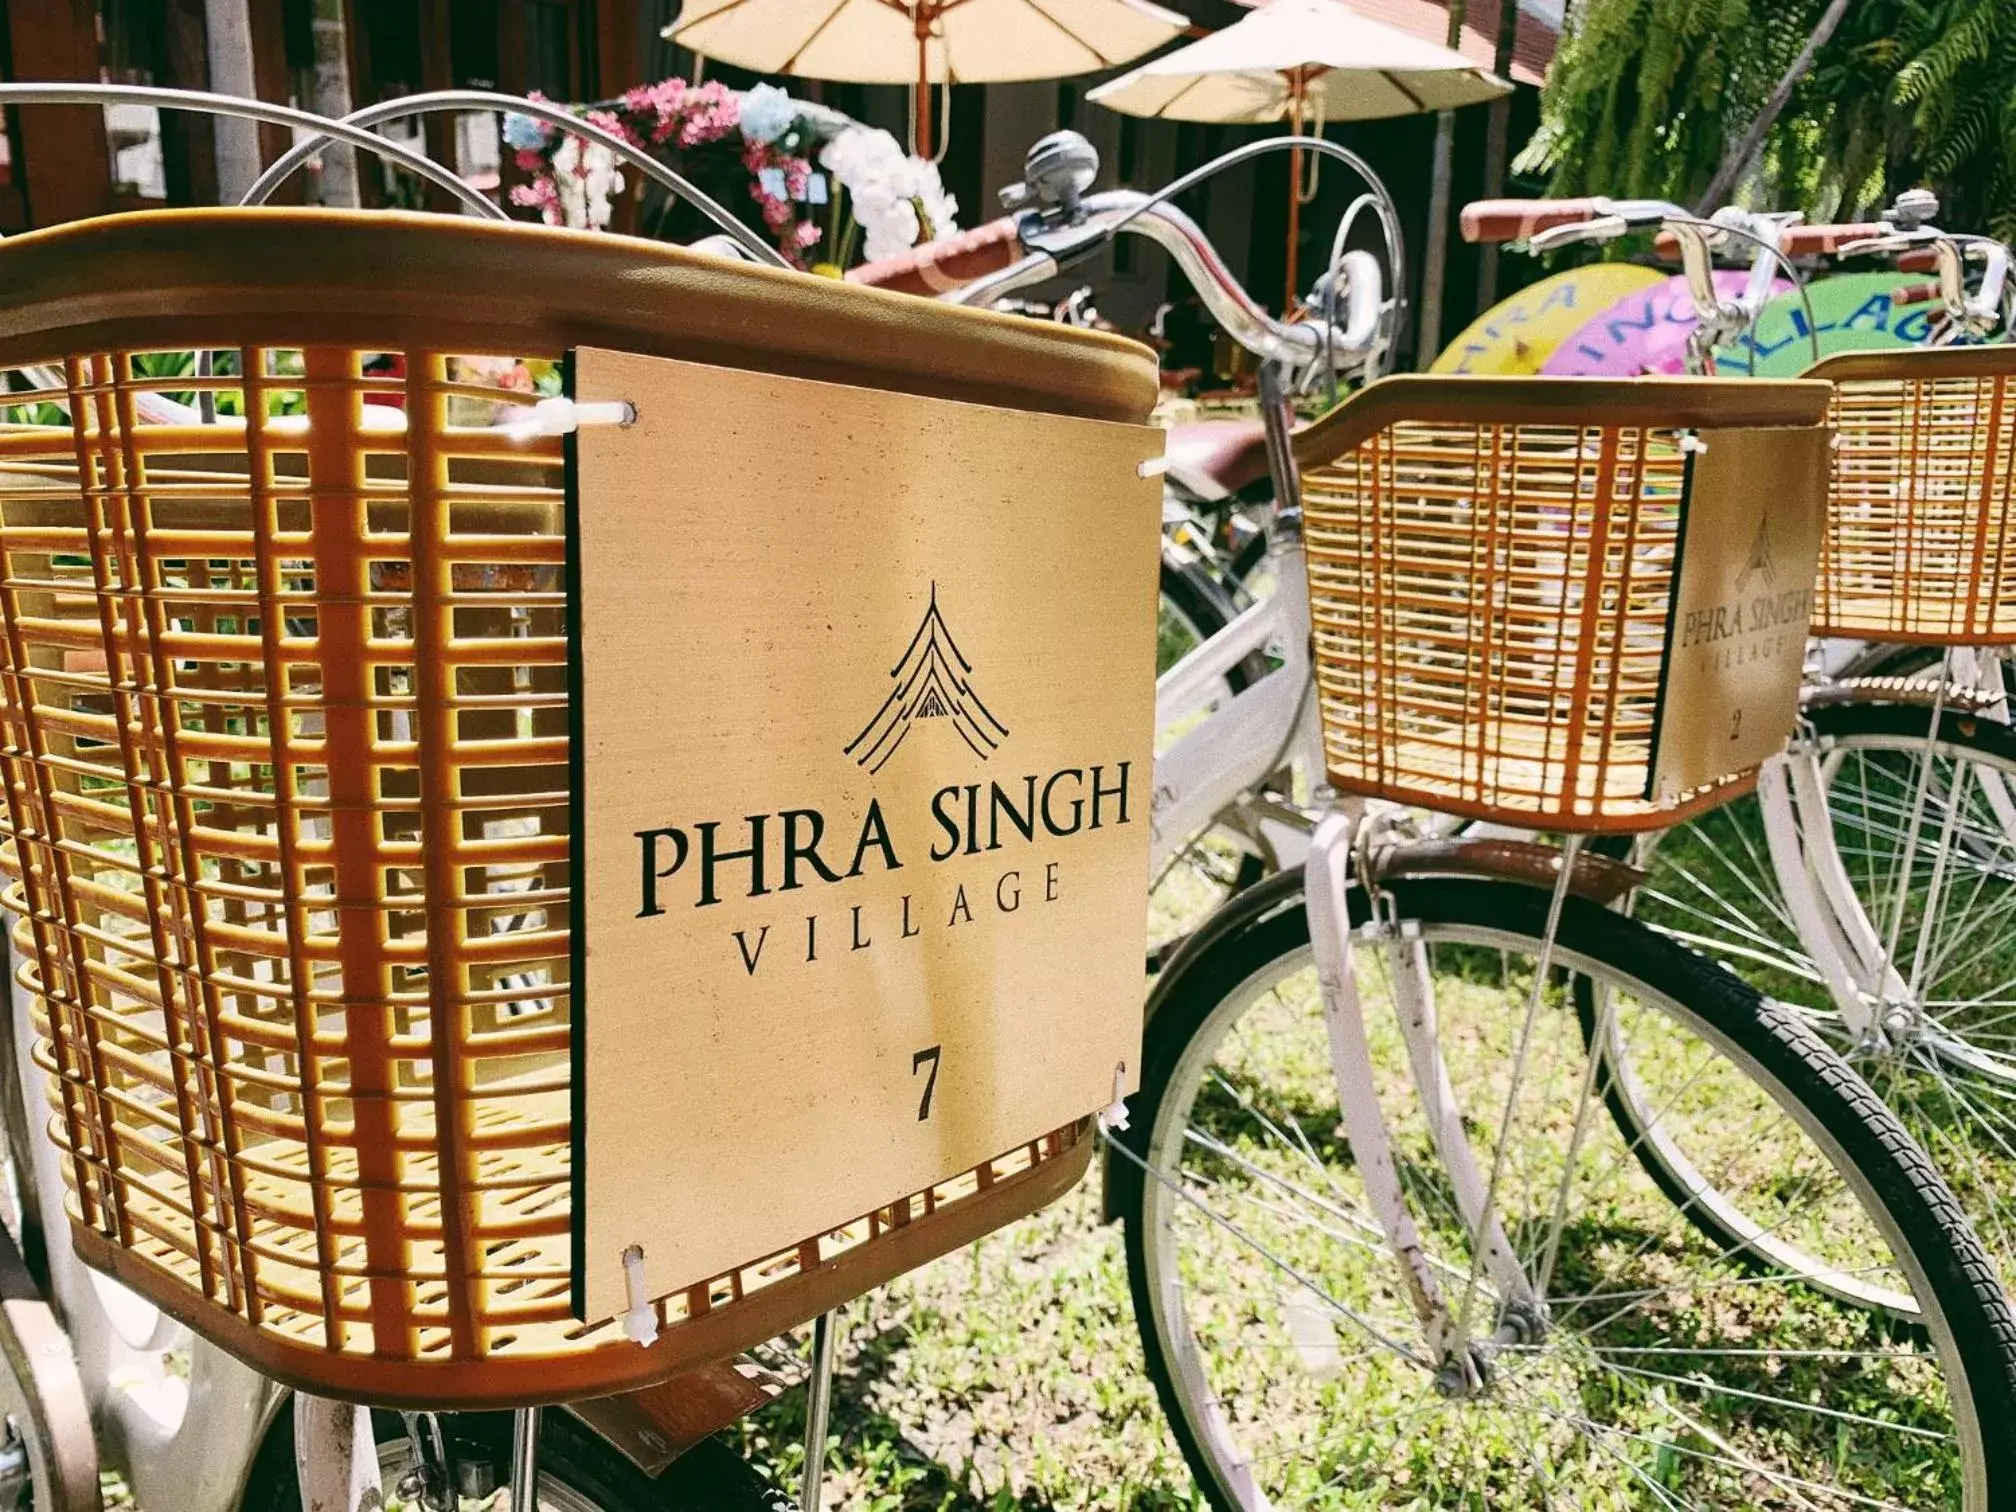 Cycling in Phra Singh Village